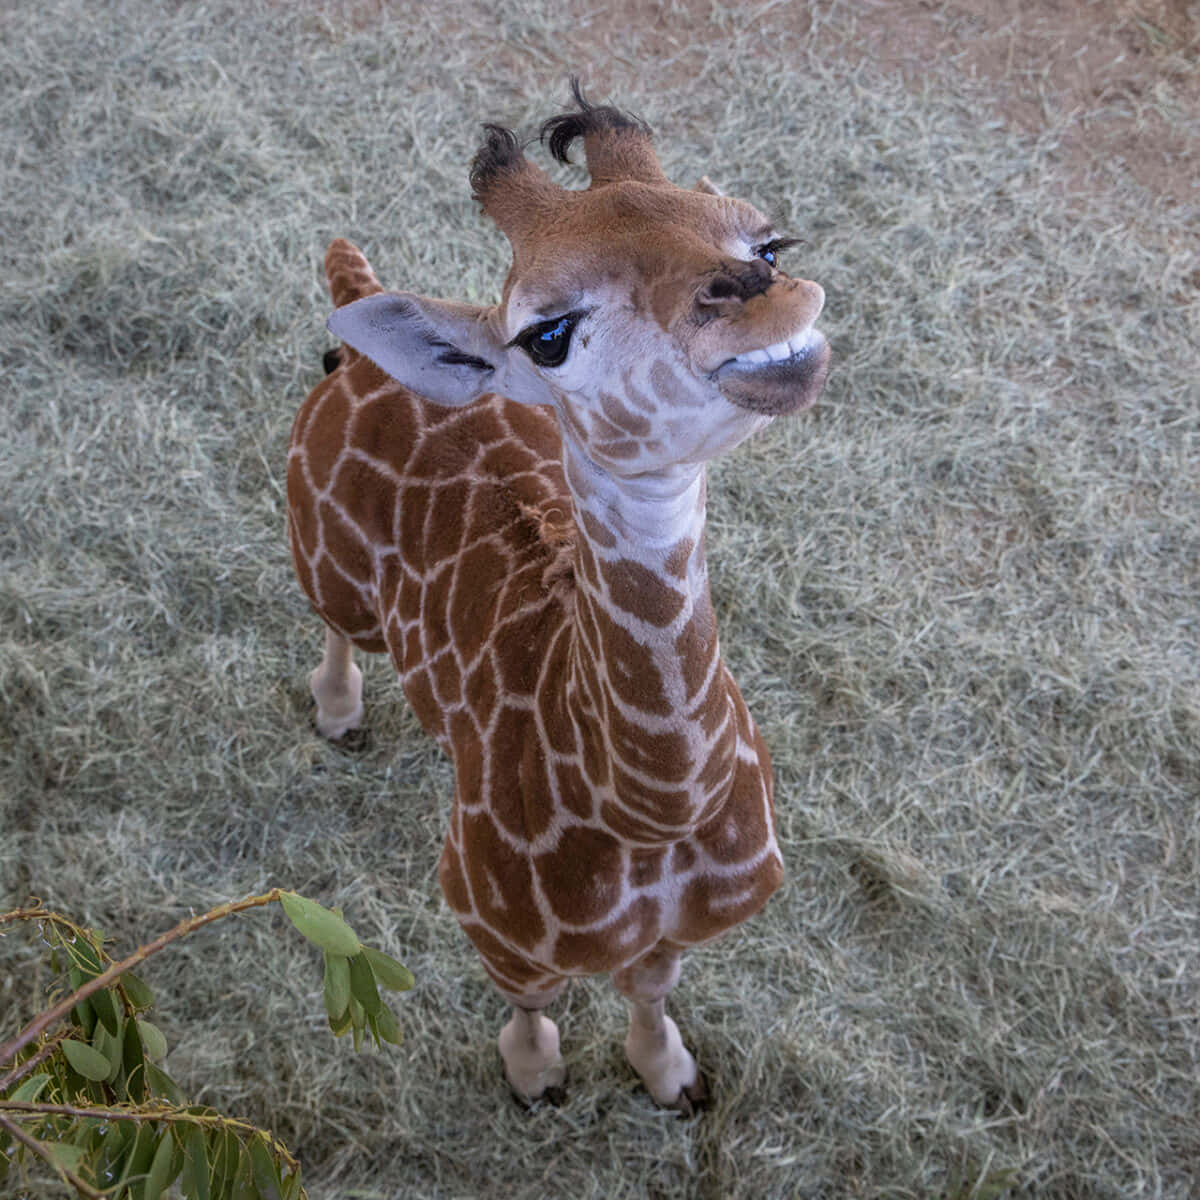 A Giraffe Standing In Hay